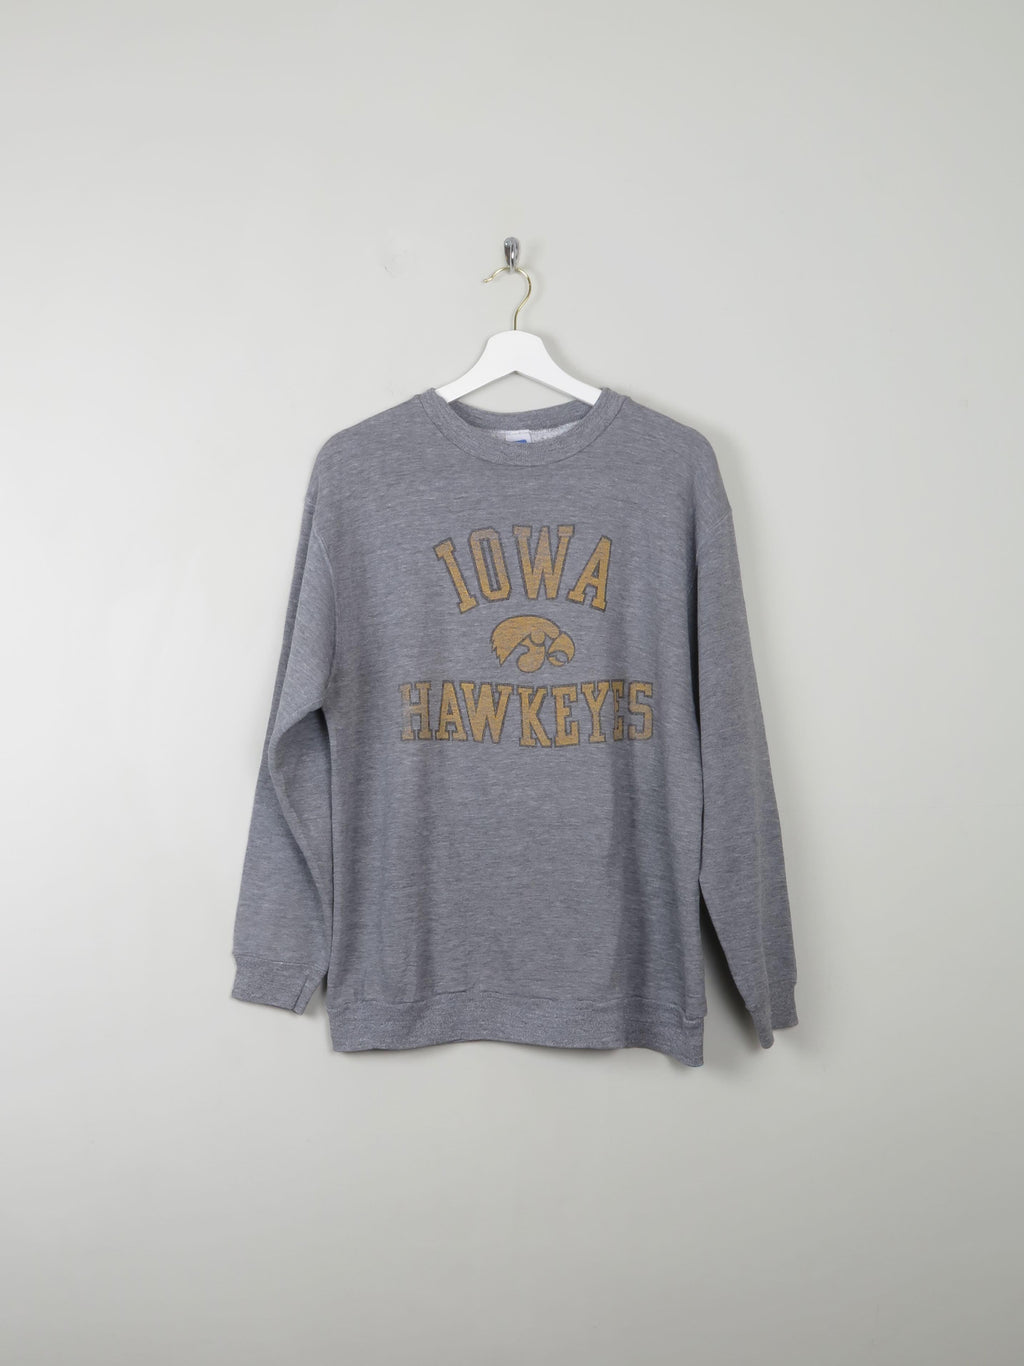 Women's Vintage Grey Sweatshirt With Logo Iowa Hawkeyes M - The Harlequin